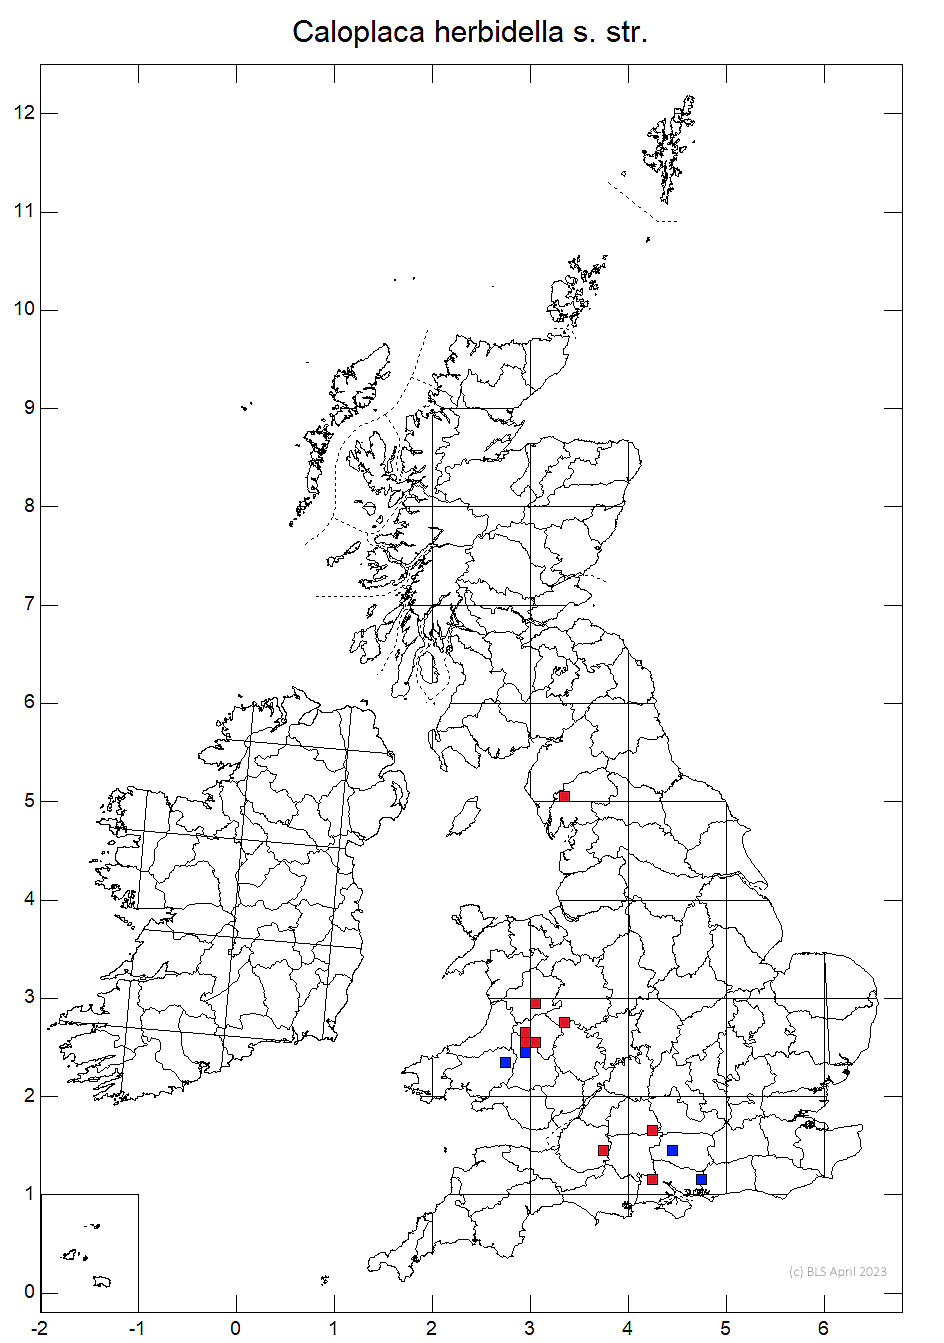 Caloplaca herbidella s. str. 10km sq distribution map